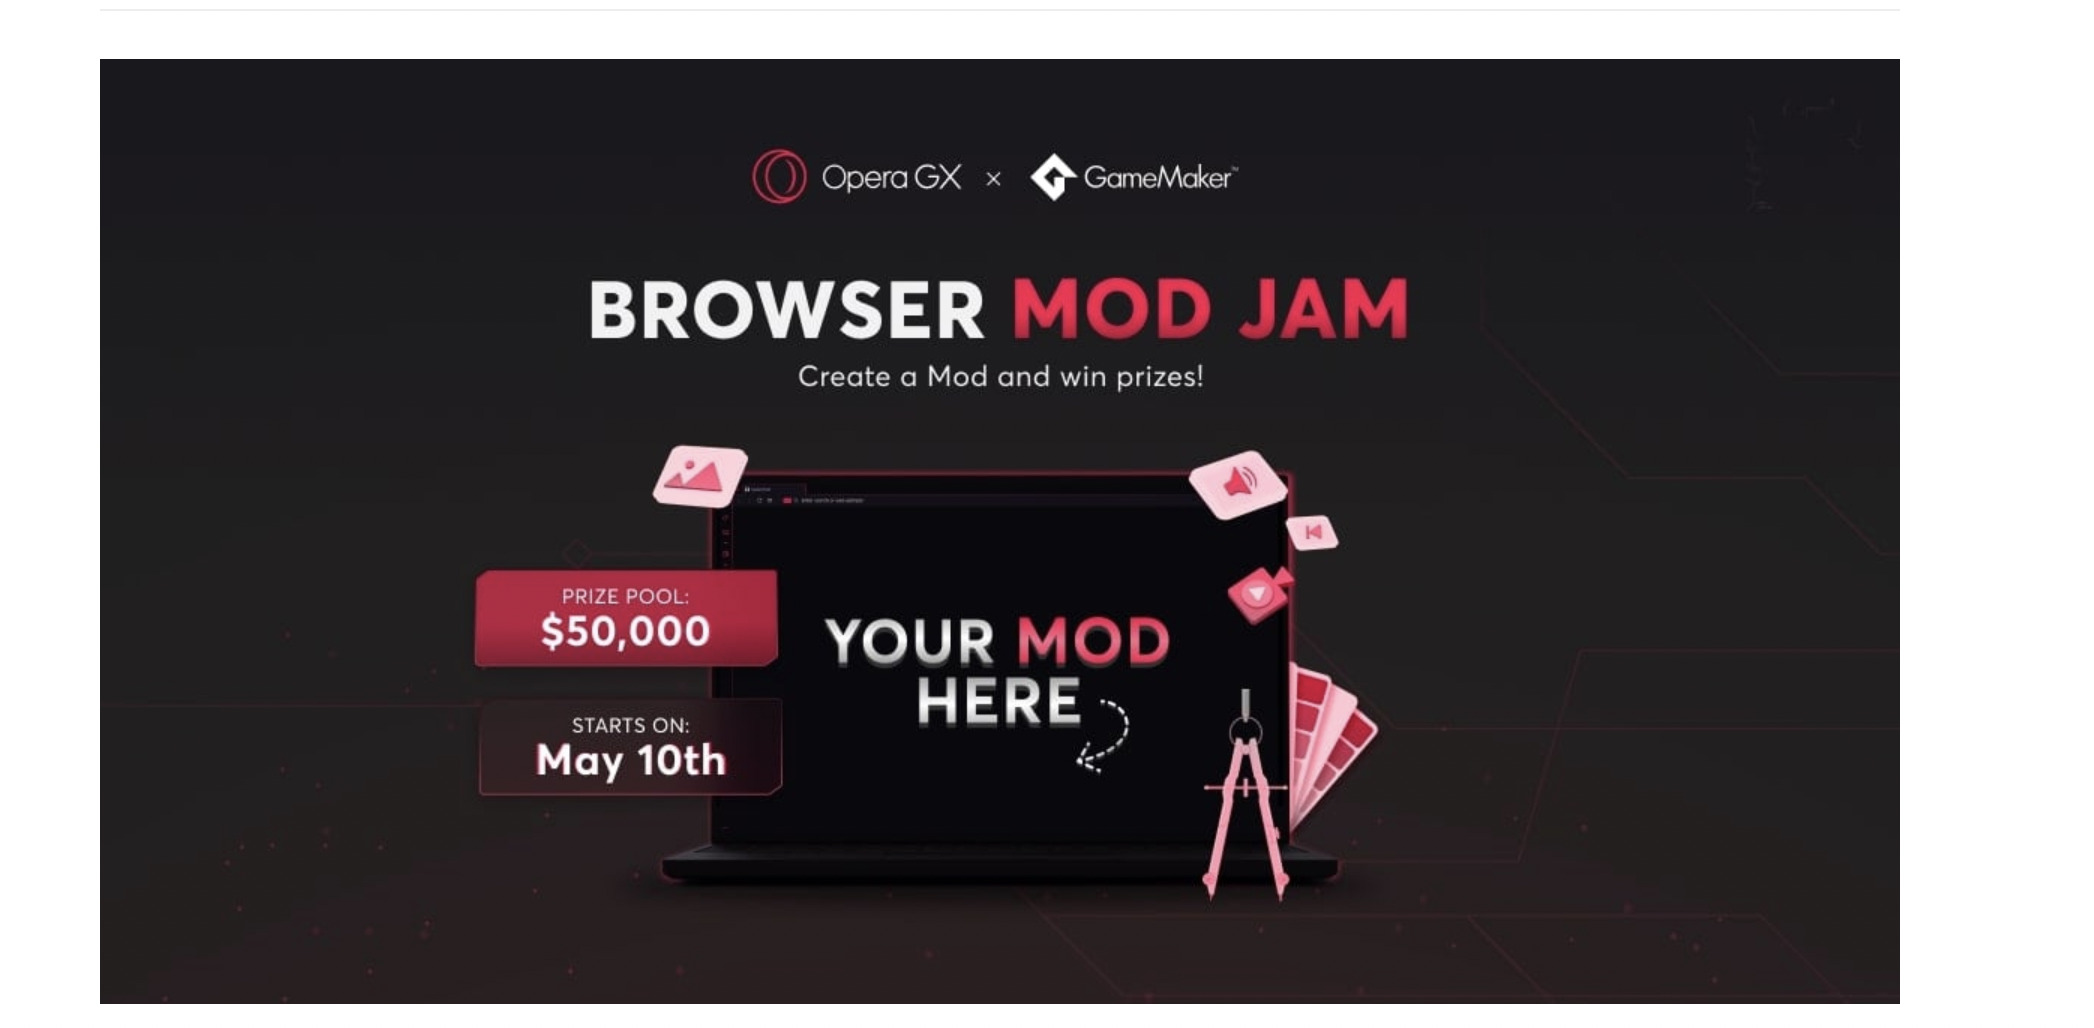 Opera GX and GameMaker announce Browser Mod Jam